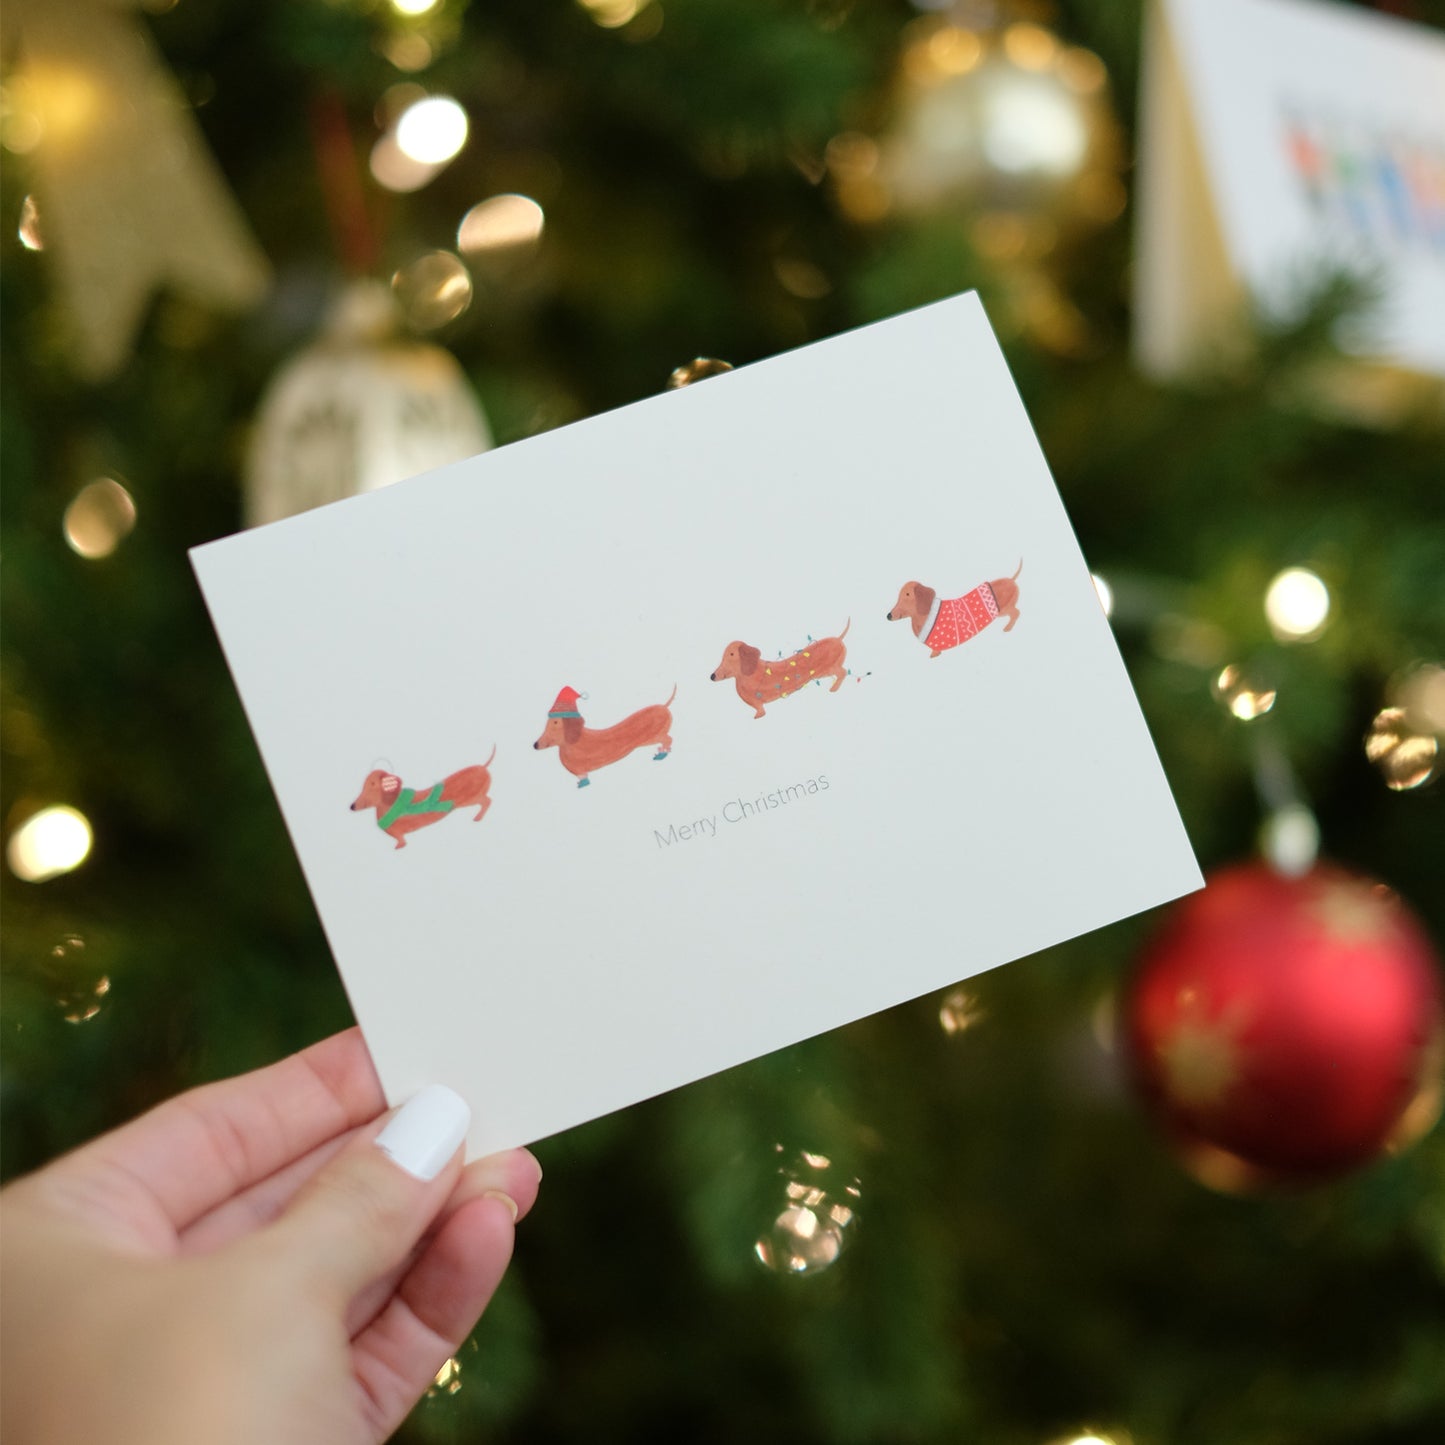 Sausage Dogs - Merry Christmas